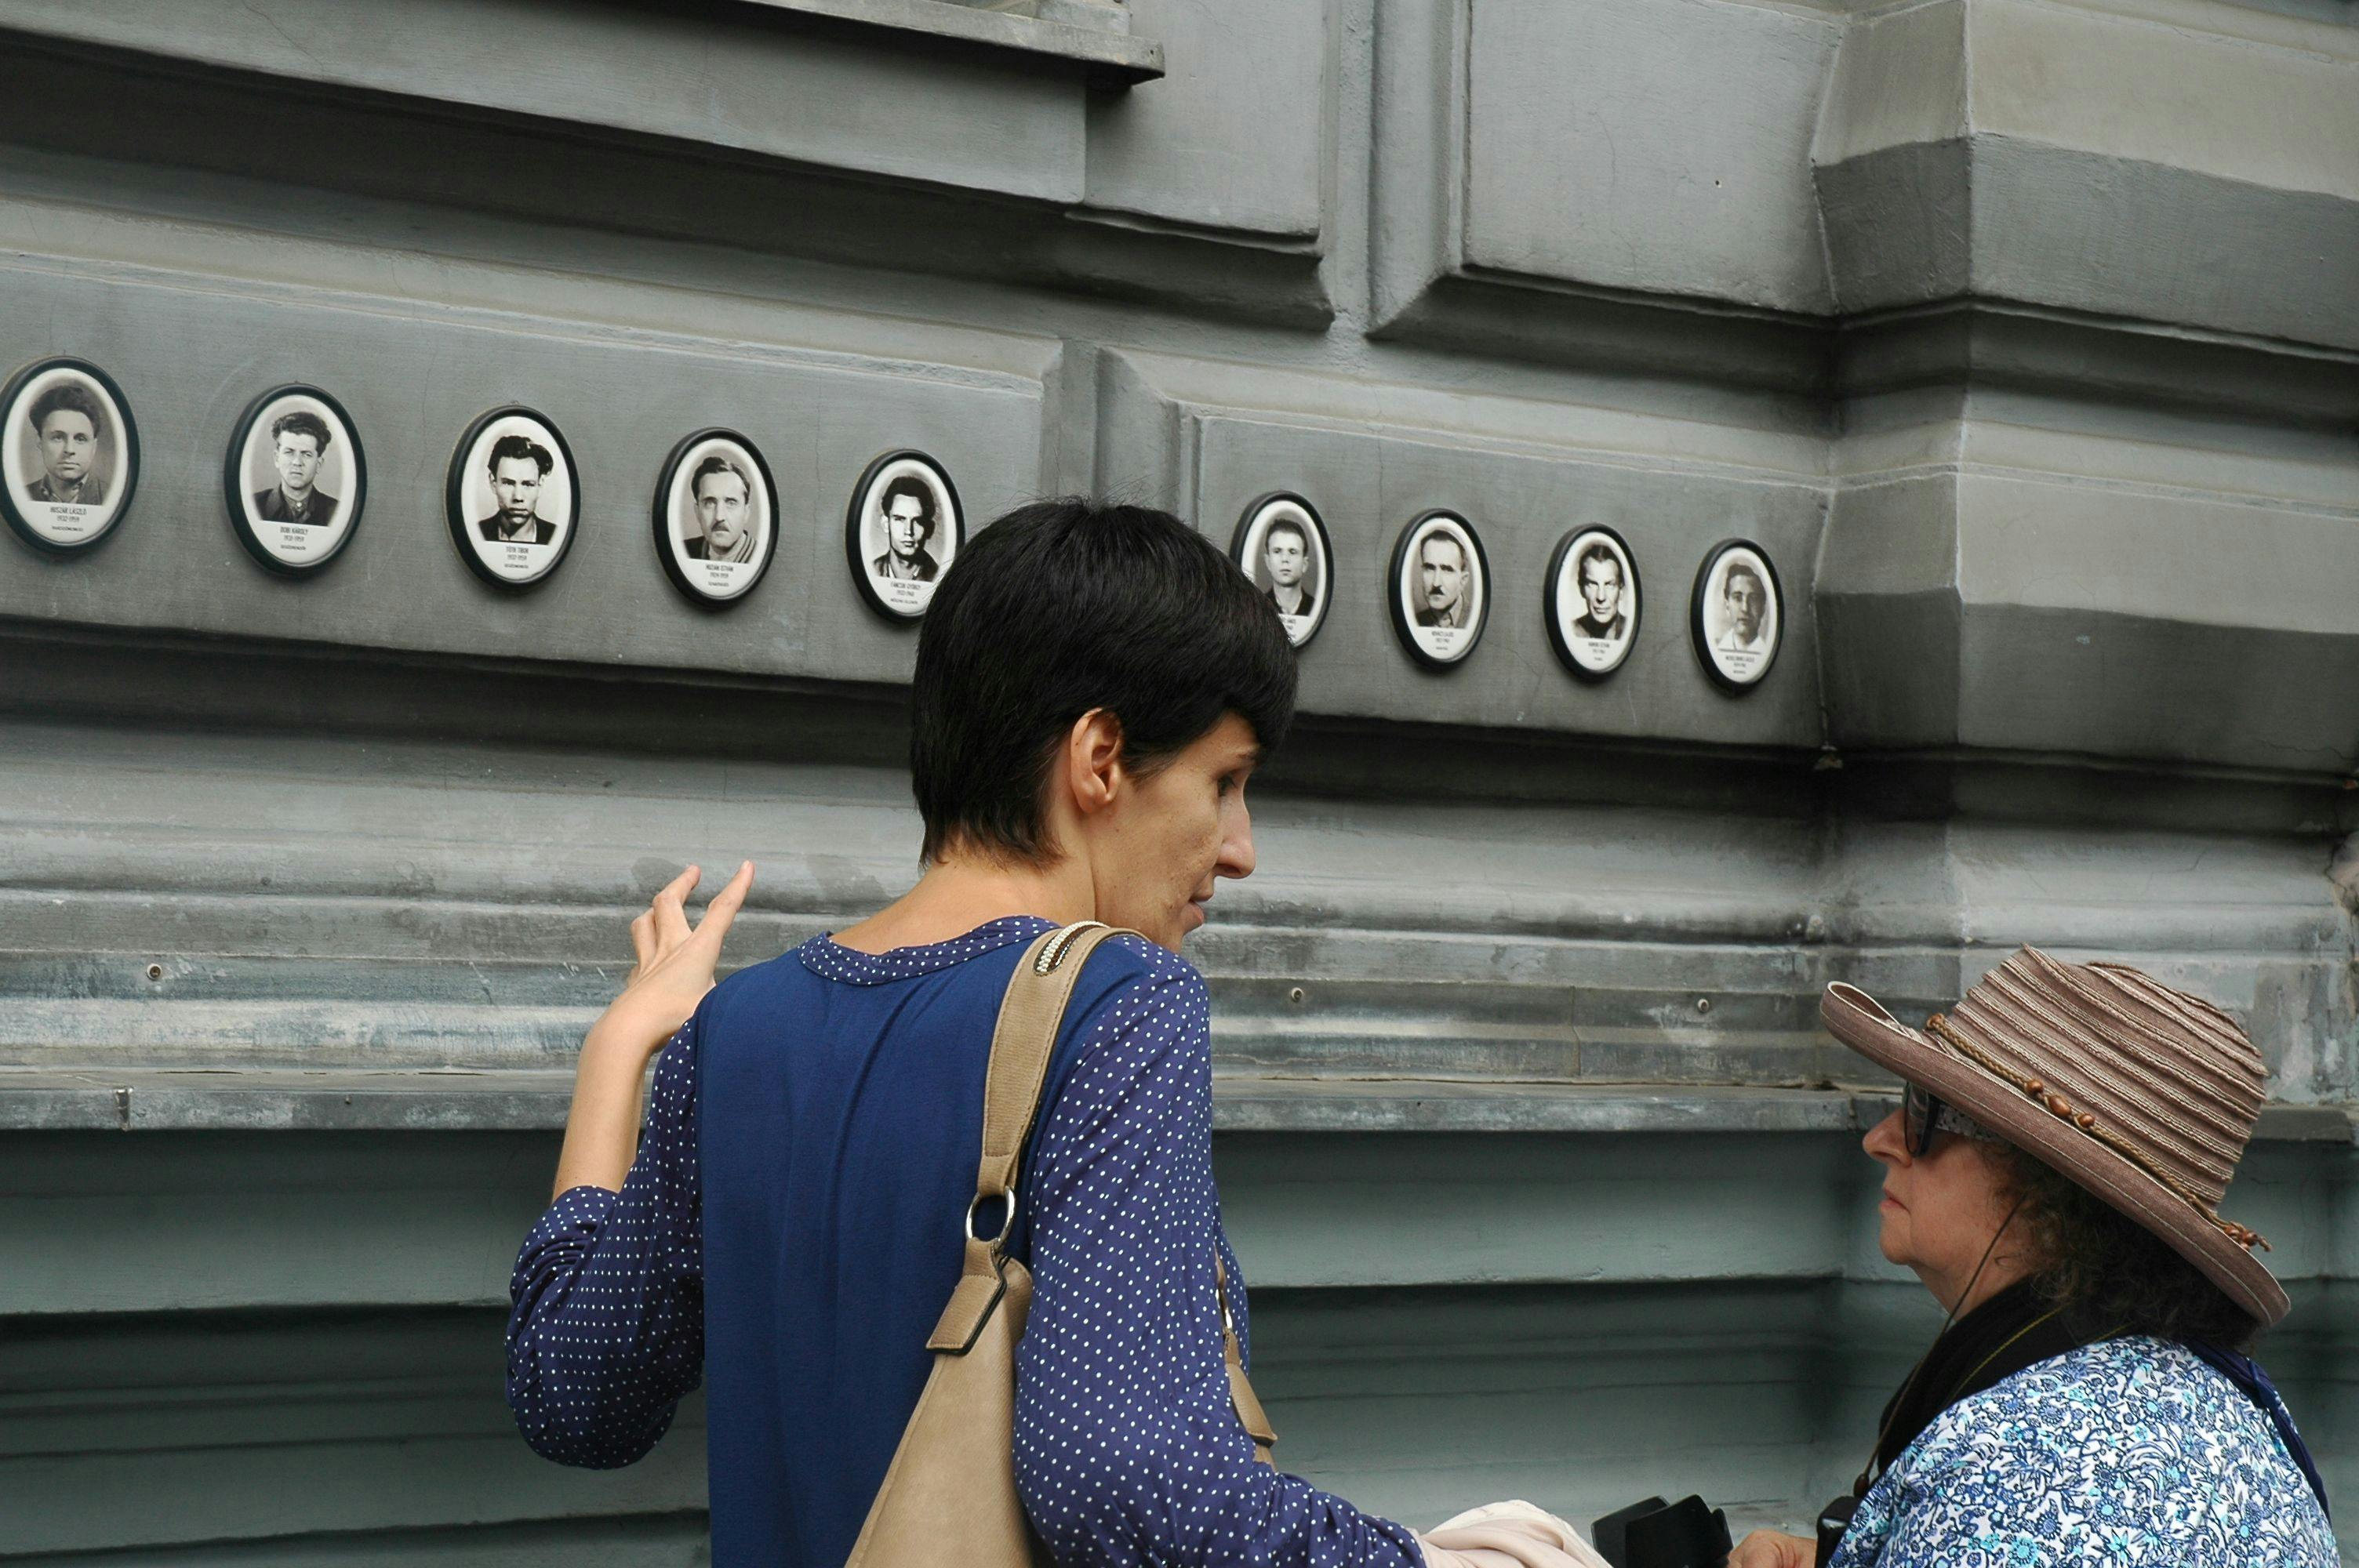 Communist Budapest The “Happiest Barrack” in Soviet Bloc Musement